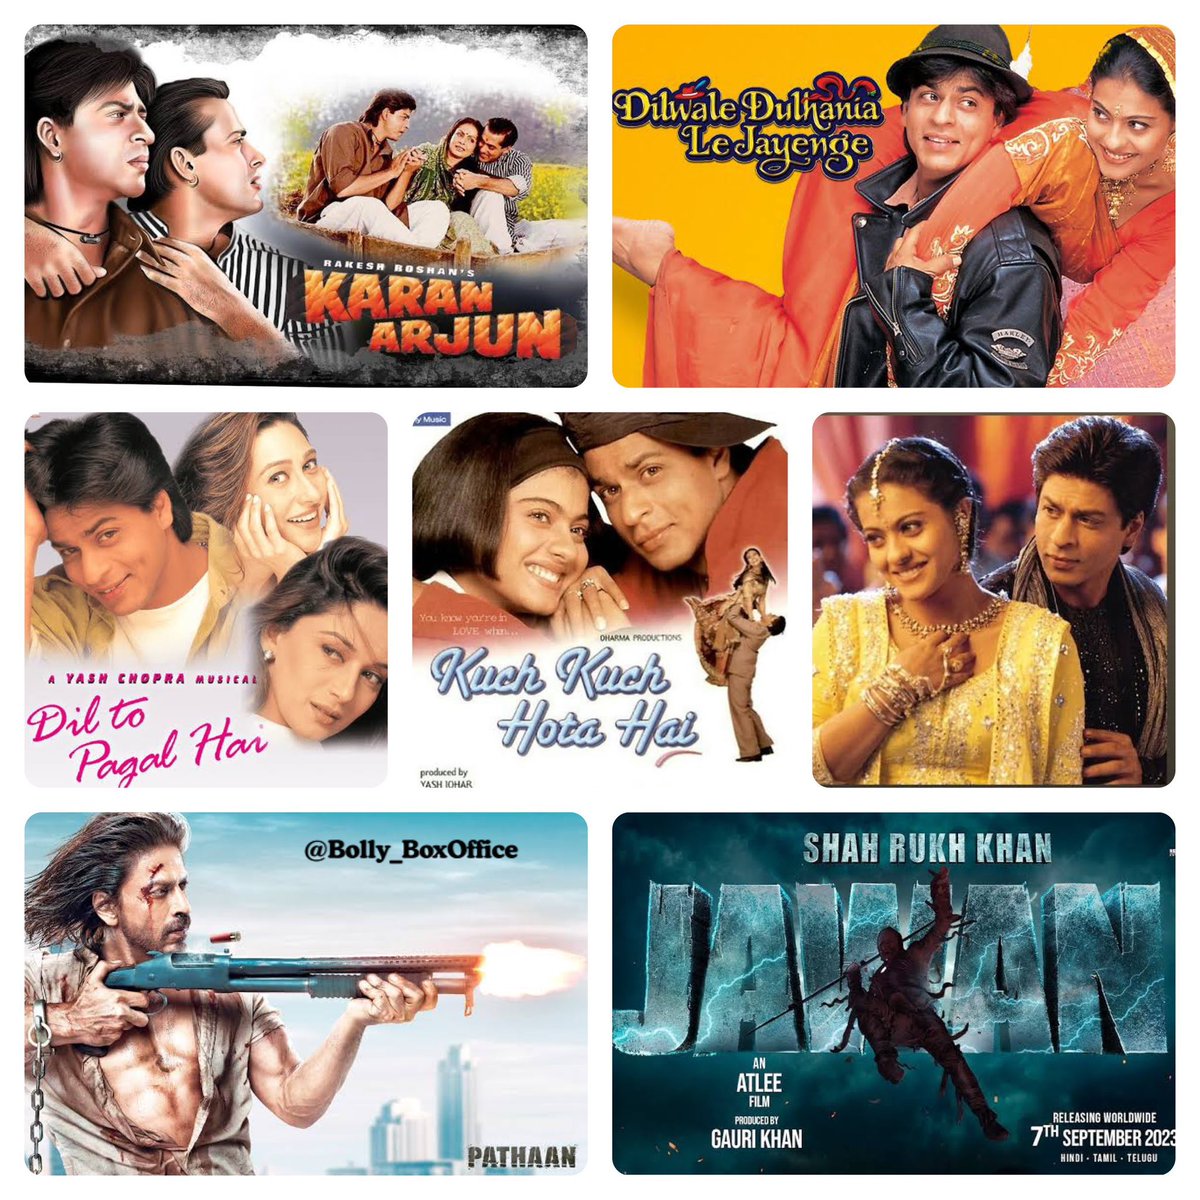 3 cr+ Footfalls Films of #ShahRukhKhan “The Highest Most By An Indian Actor Since 1990s” #IndiaBiz. 
⭐️Karan Arjun [1995]
⭐️DDLJ [1995]
⭐️Dil To Pagal He [1997]
⭐️Kuch Kuch Hota Hai [1998]
⭐️Kabhi Khushi Kabhie Gham [2001]
⭐️Pathaan [2023]
⭐️Jawan [2023] 
Note: Including Re-Runs.